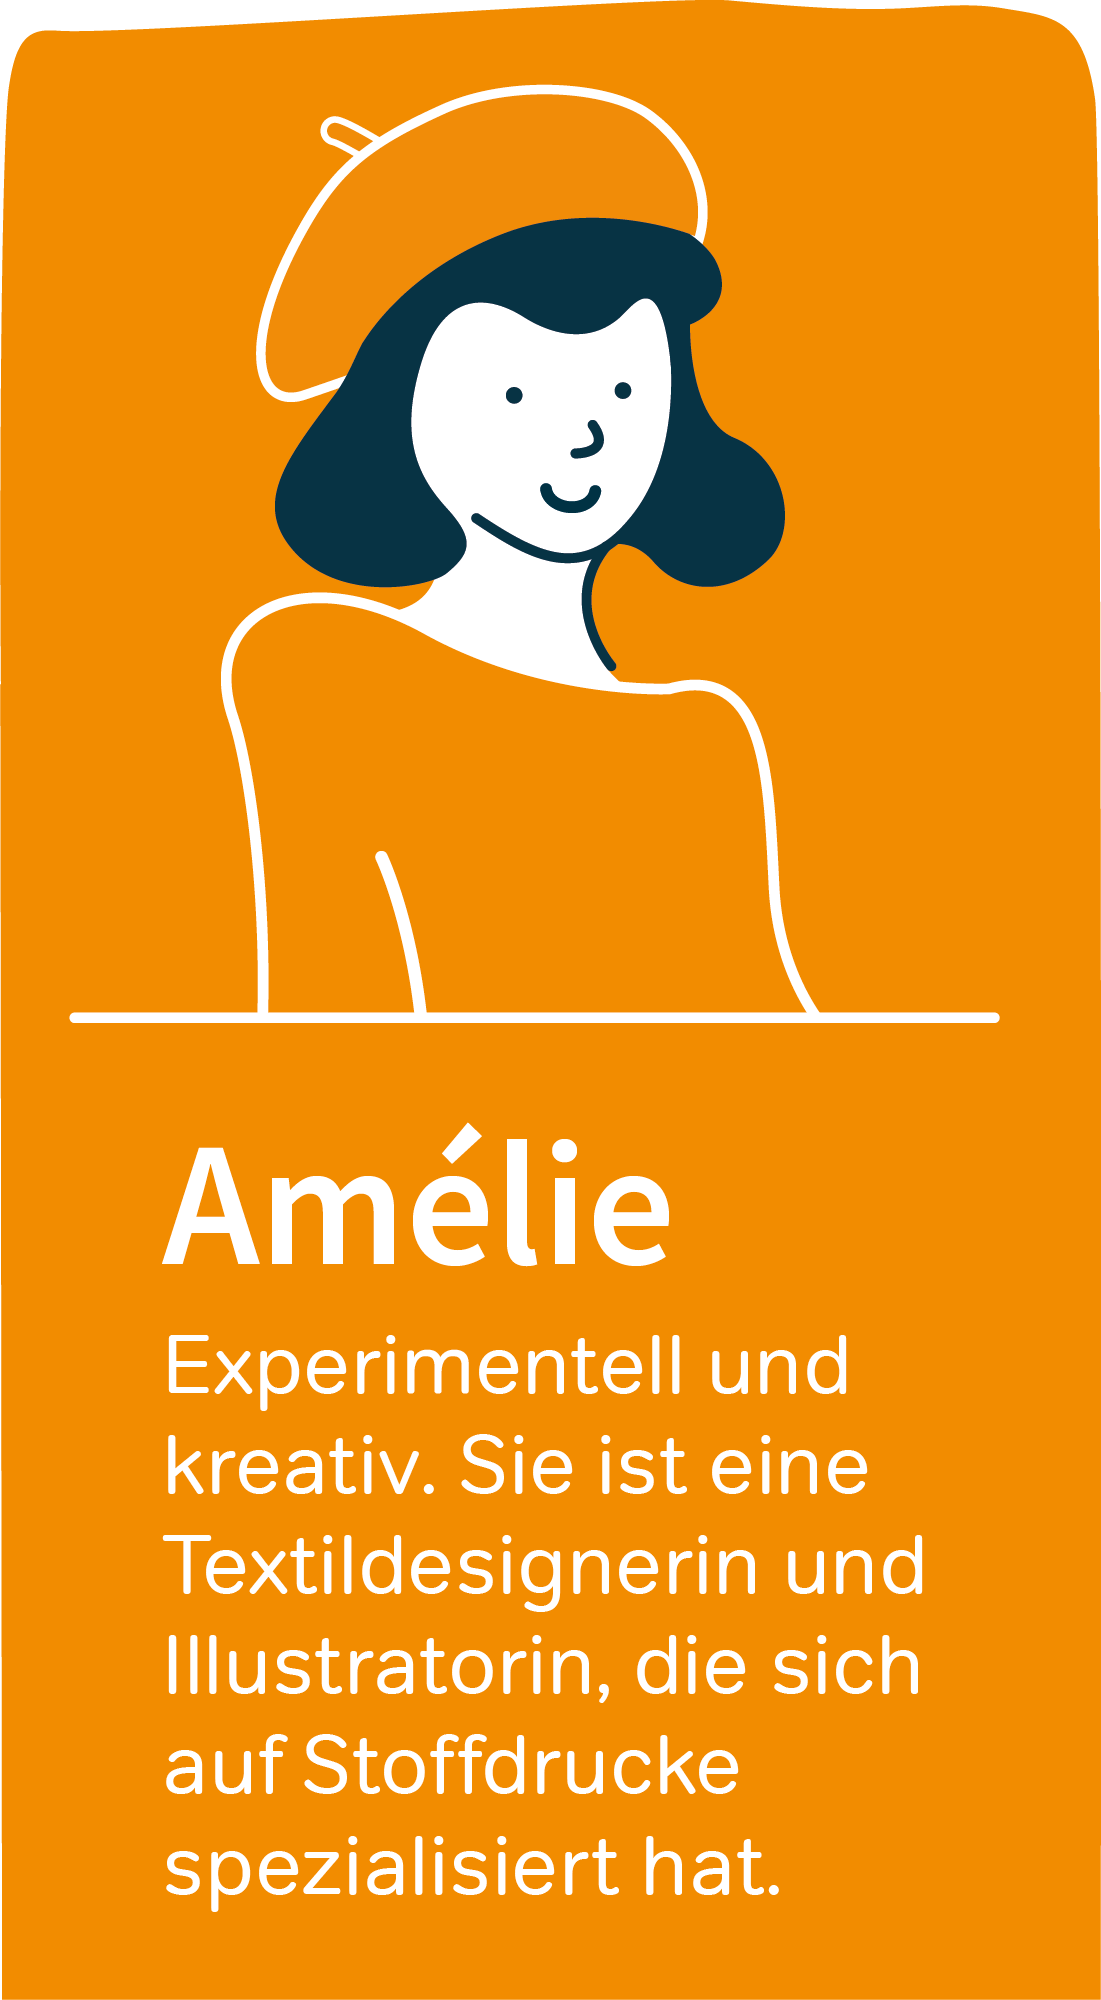 Equipe characters Amelie by GPU Design